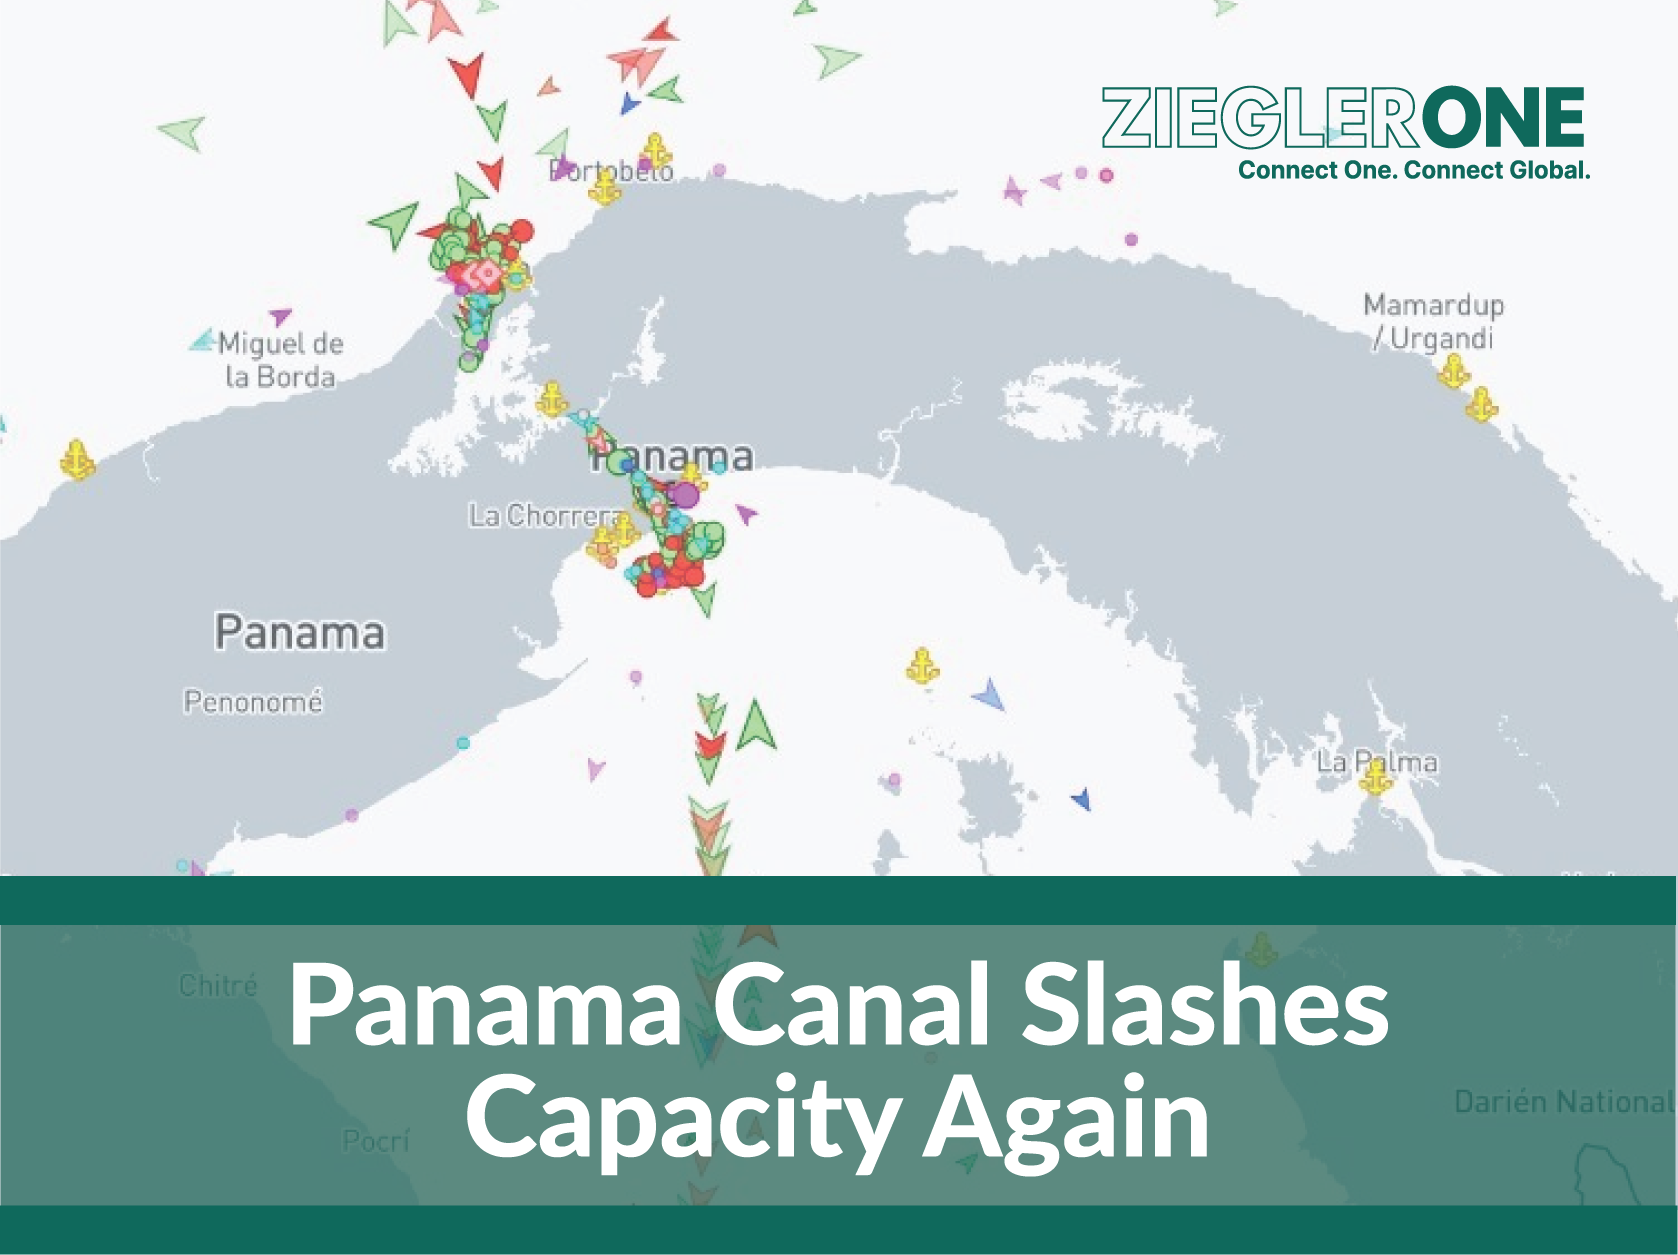 Panama Canal slashes capacity again